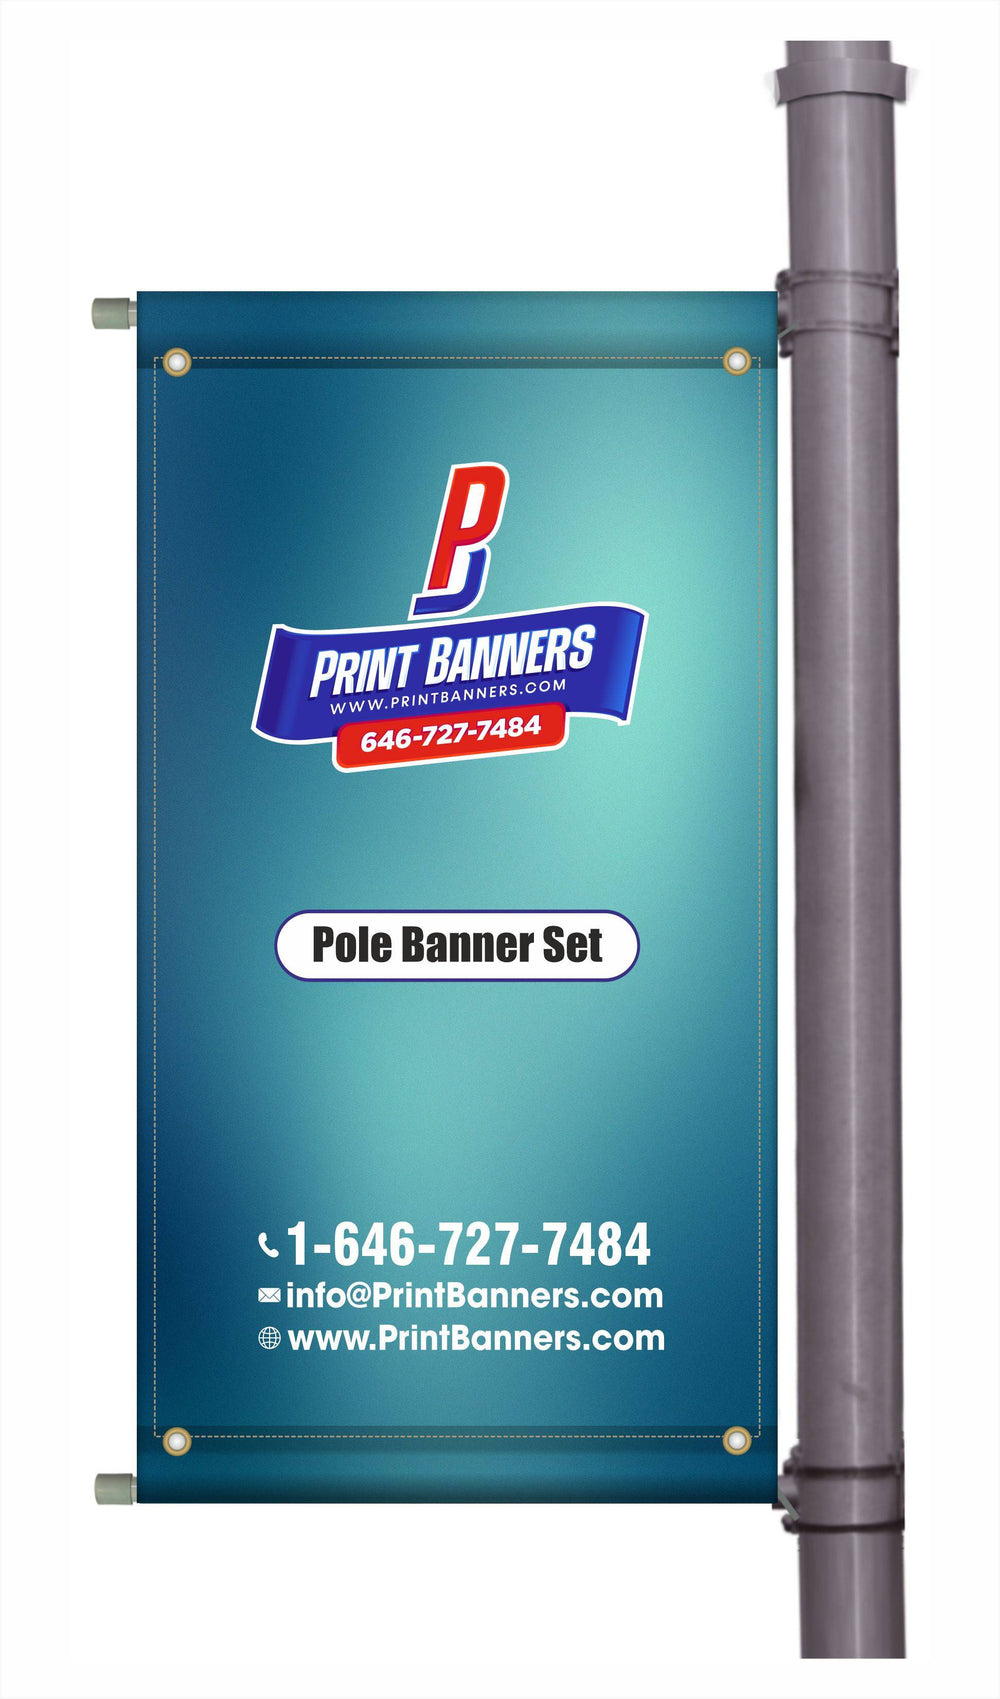 Pole Banner Set - PrintBanners